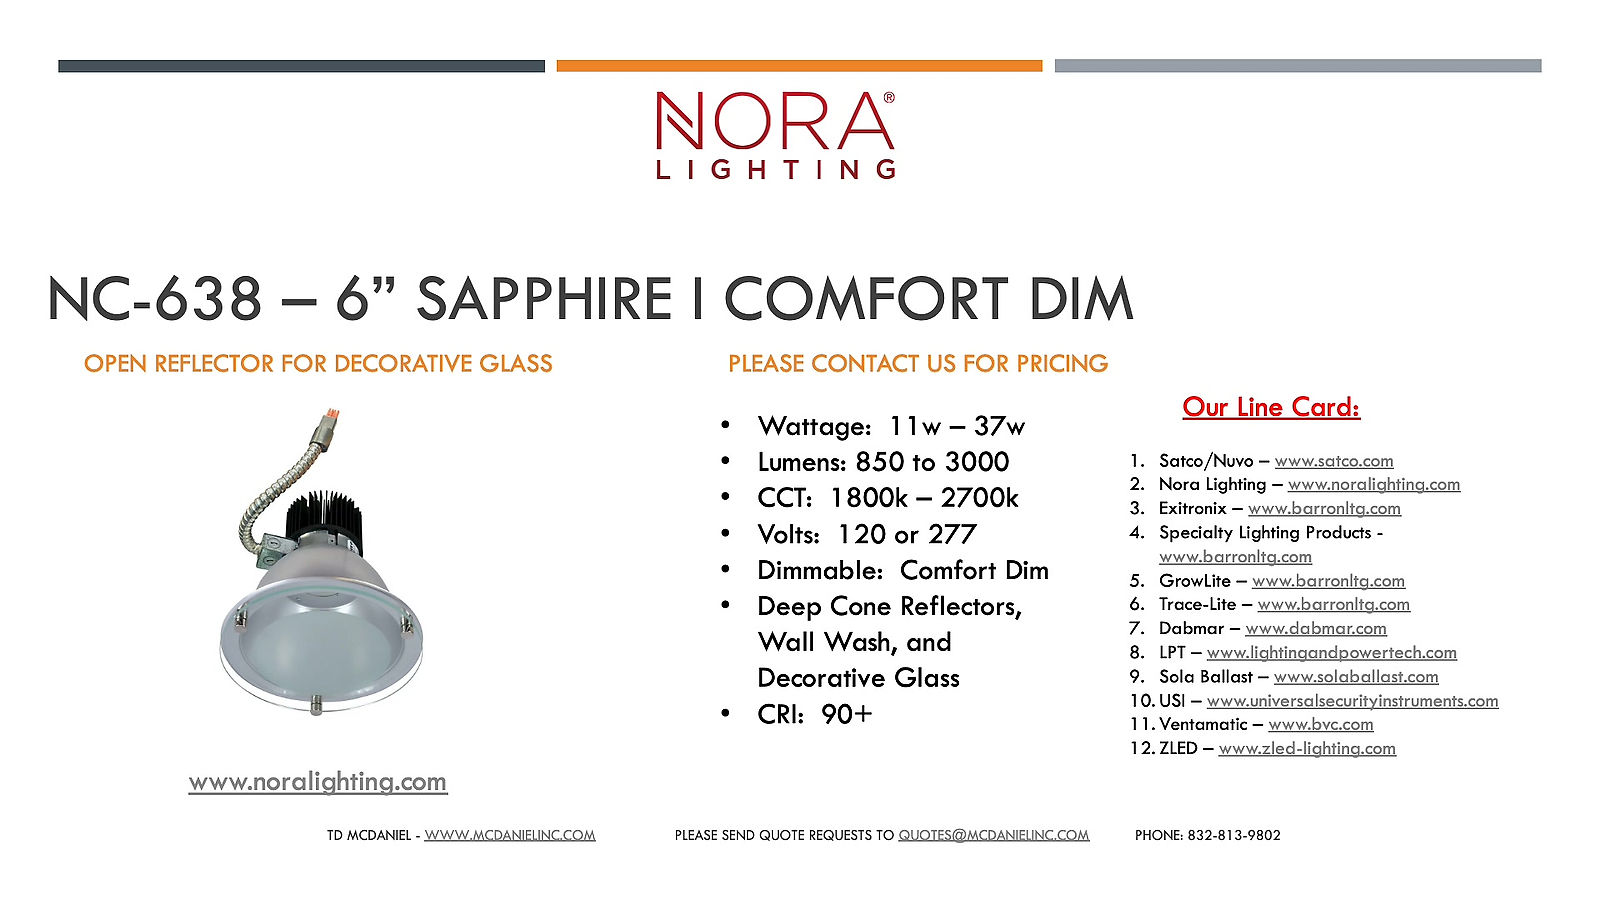 Nora NC-638 Sapphire Comfort Dim Presentation